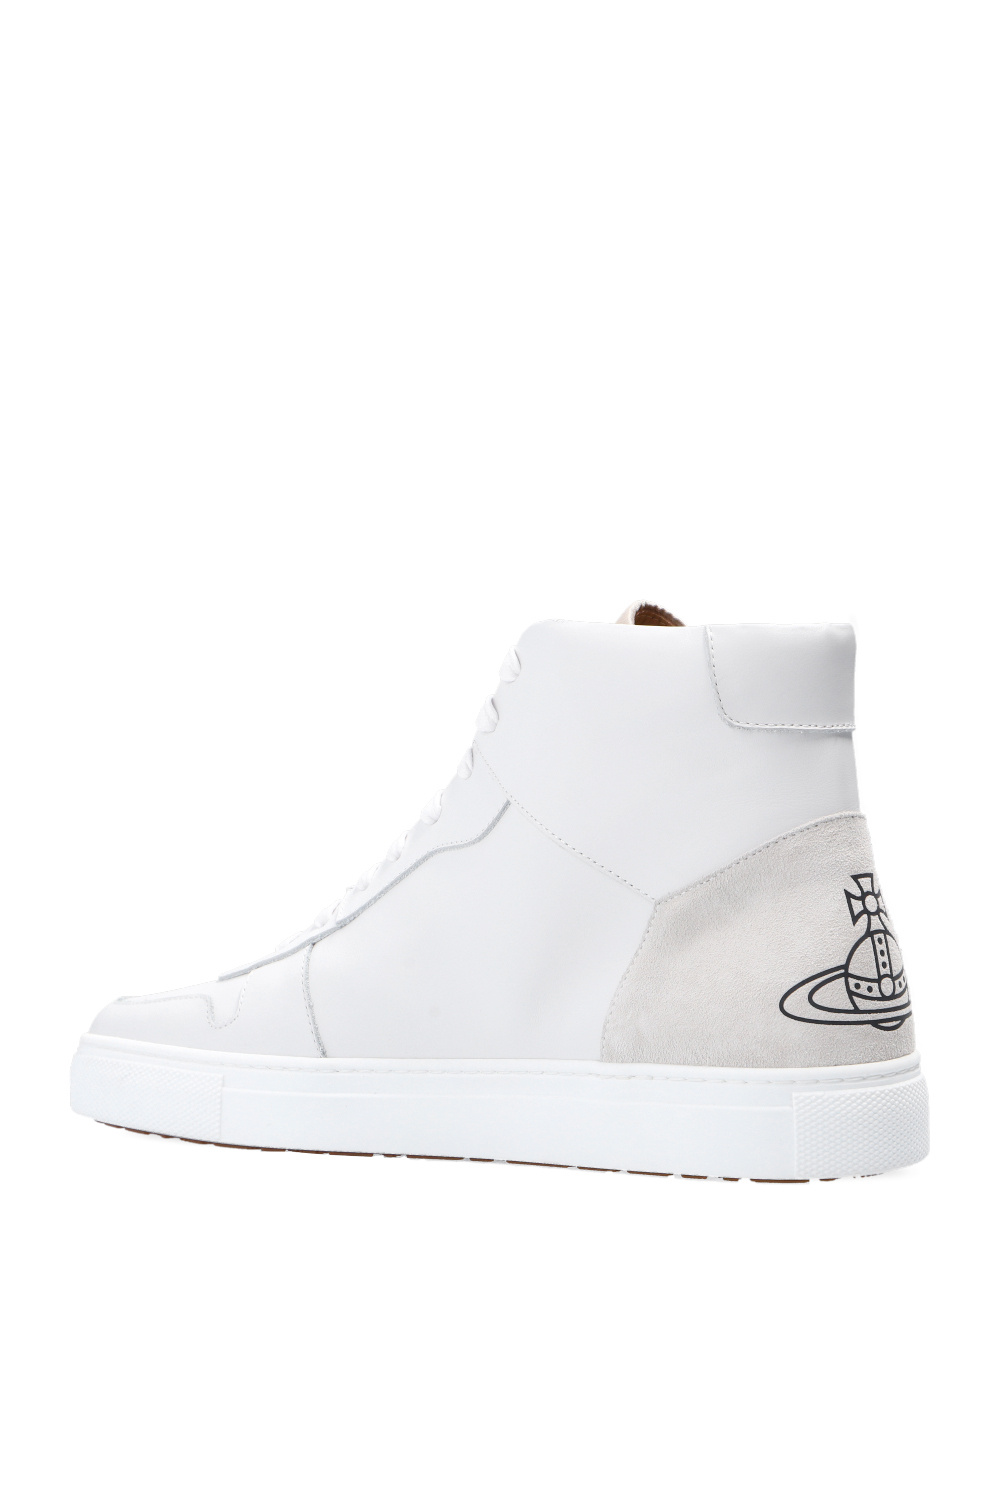 Apollo' high-top sneakers Vivienne Westwood - Vitkac GB